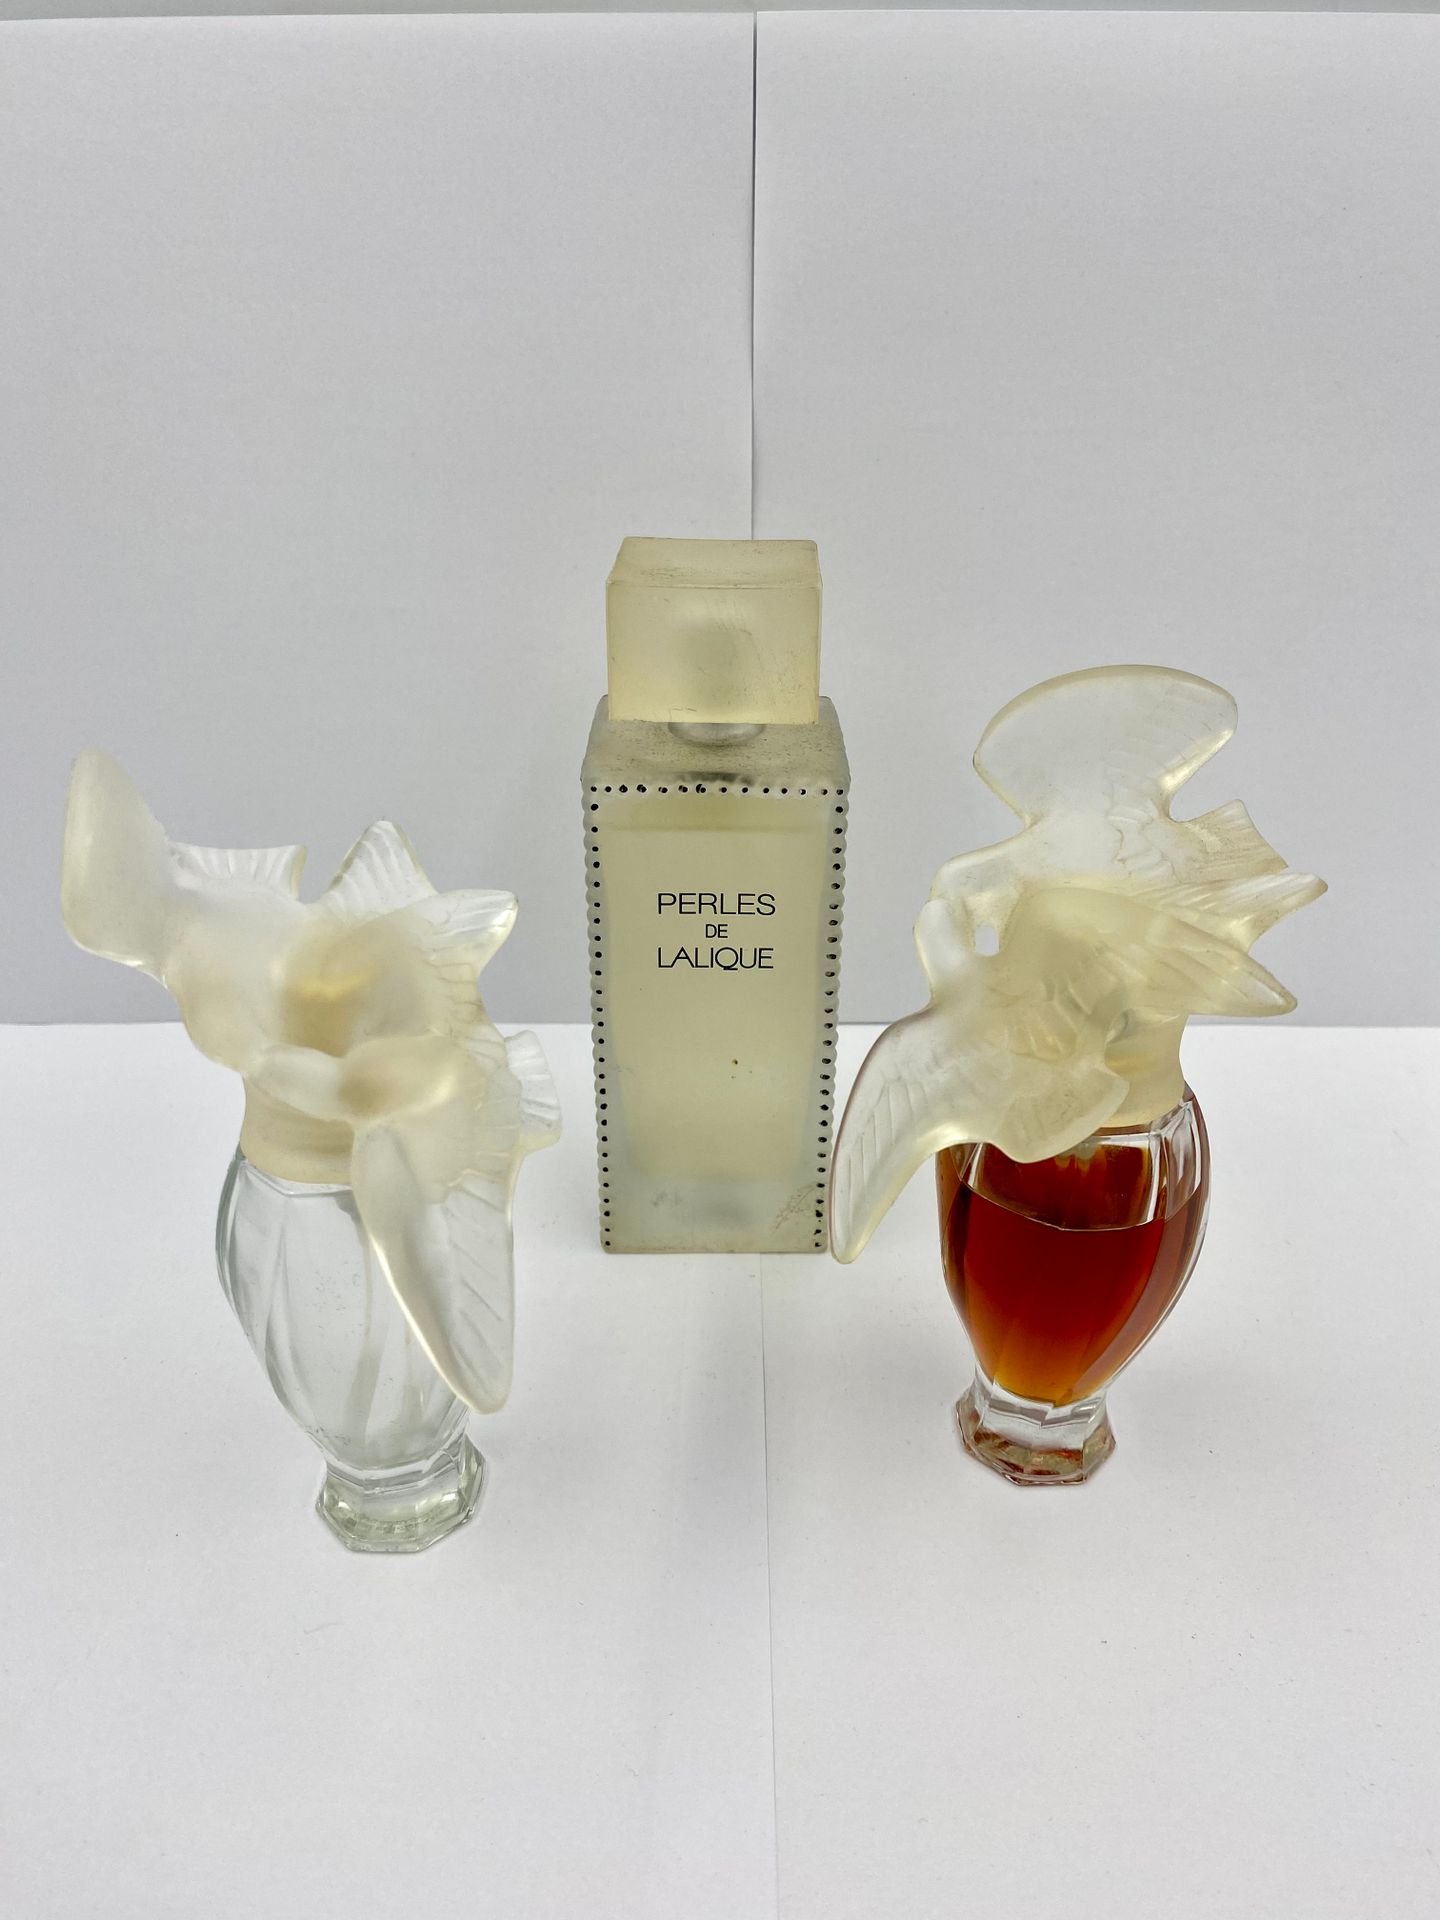 PARFUMS LALIQUE RICCI 香水套装：NINA RICCI，Air du temps两瓶；高13厘米

拉力克的PERLES，玻璃瓶高13厘米